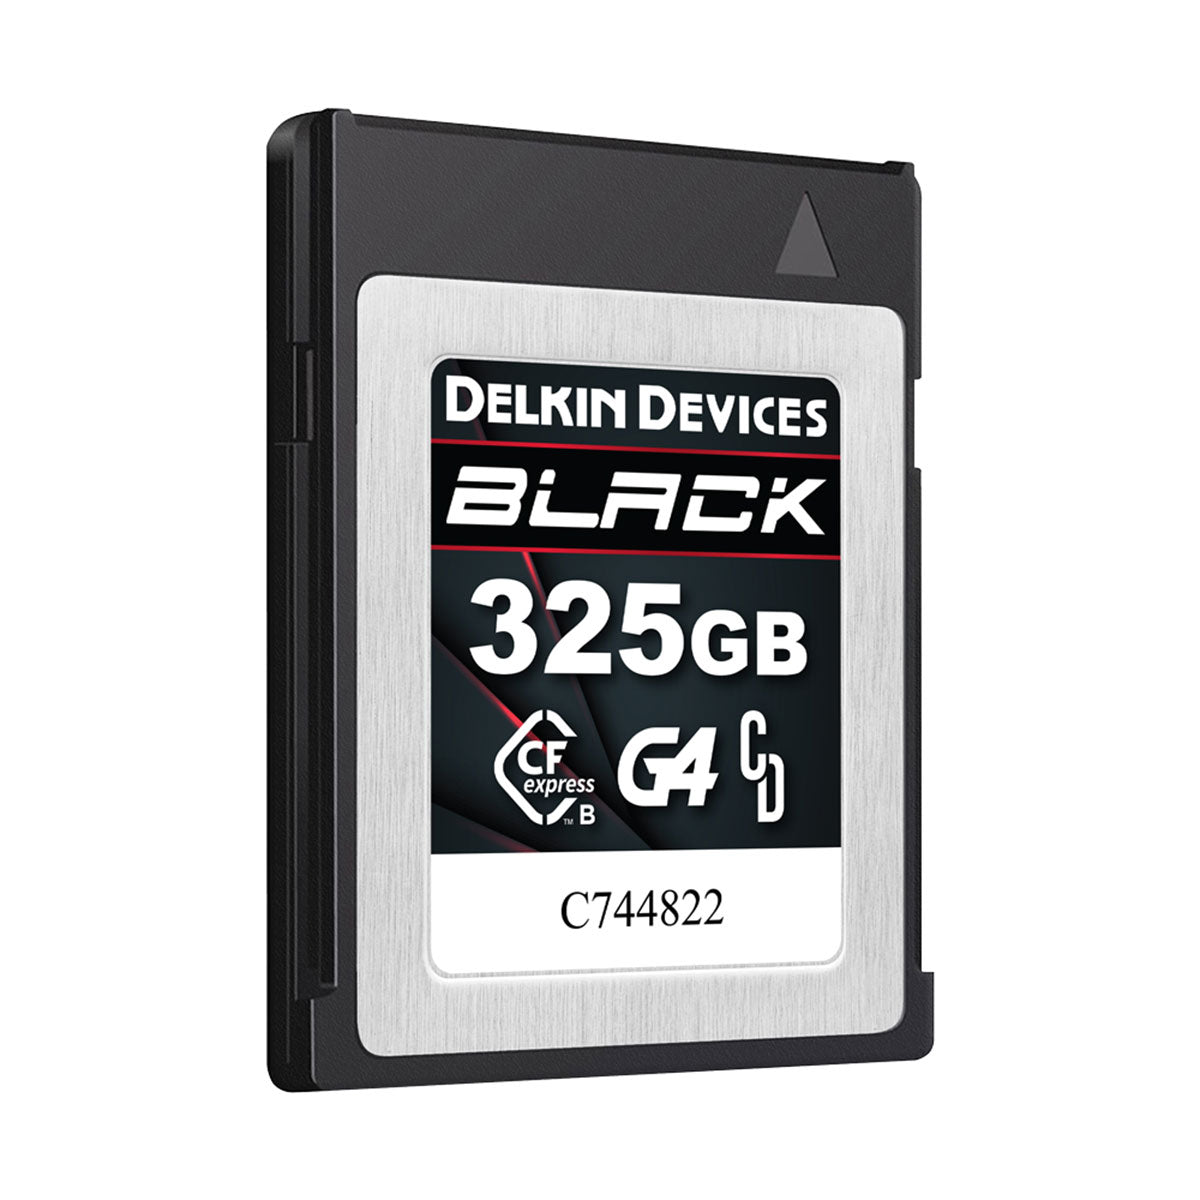 Delkin BLACK 325GB G4 CFexpress Type B Memory Card